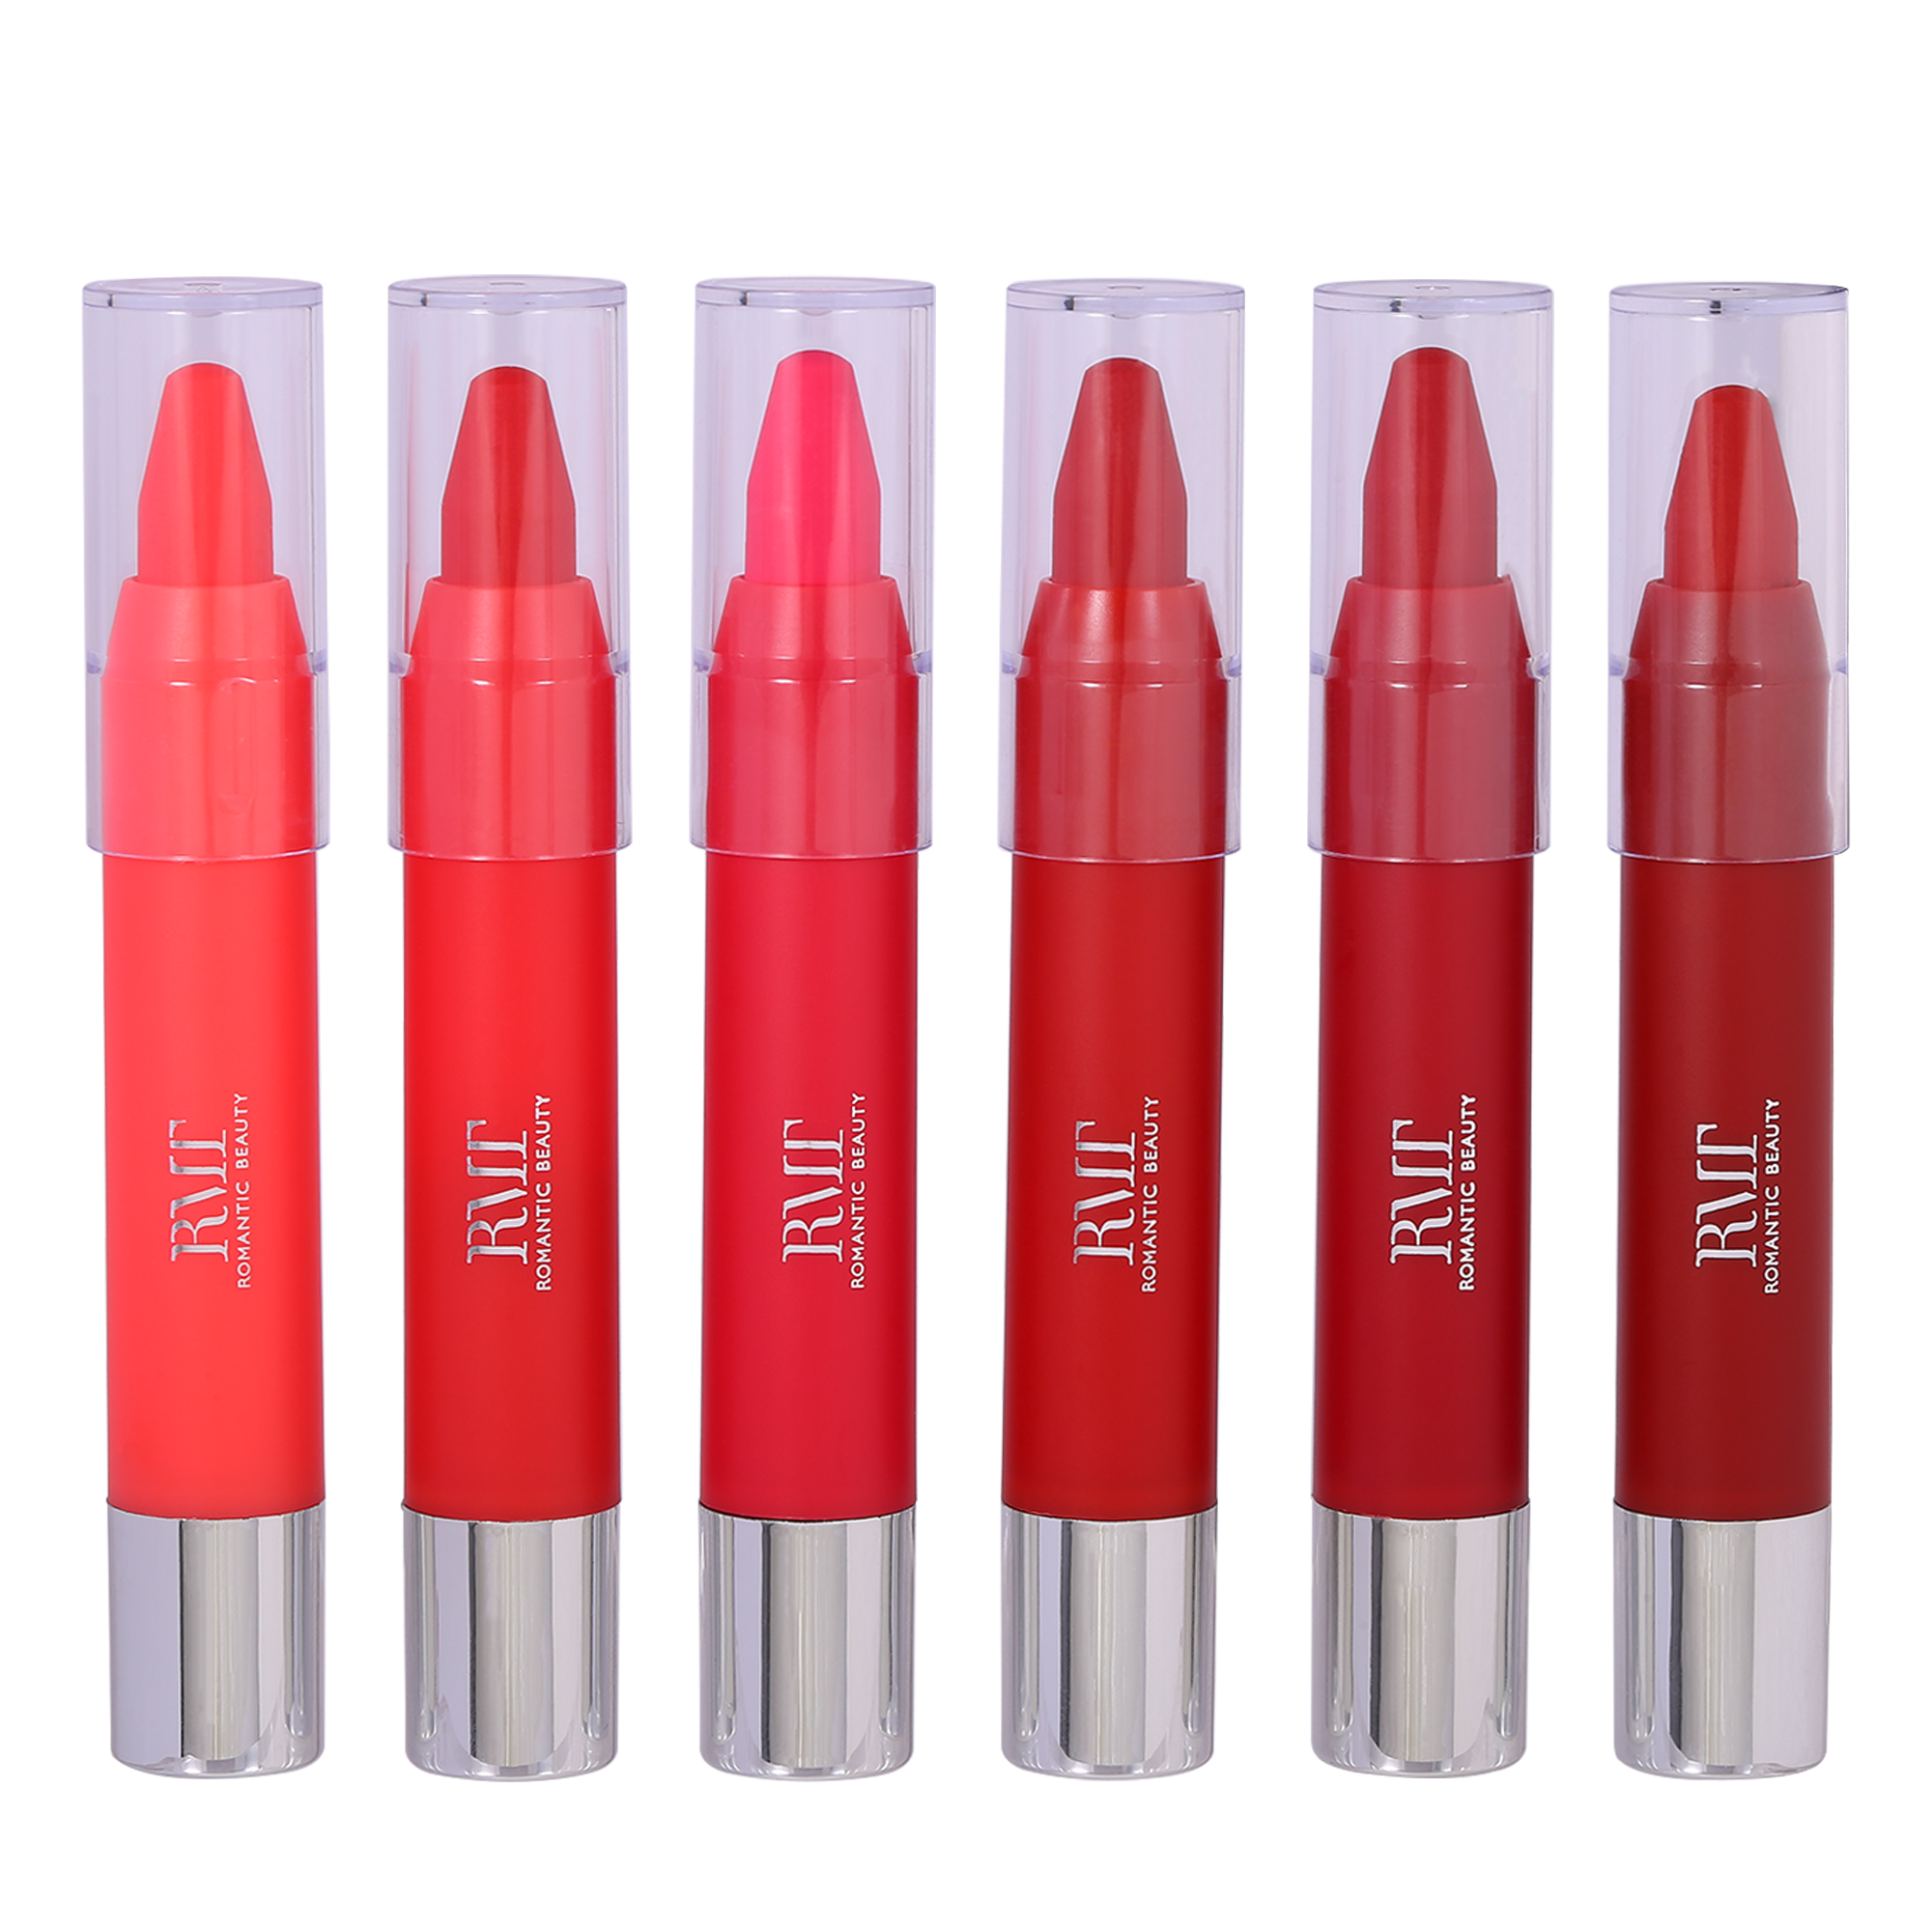 Crayon Lipstick (Red)